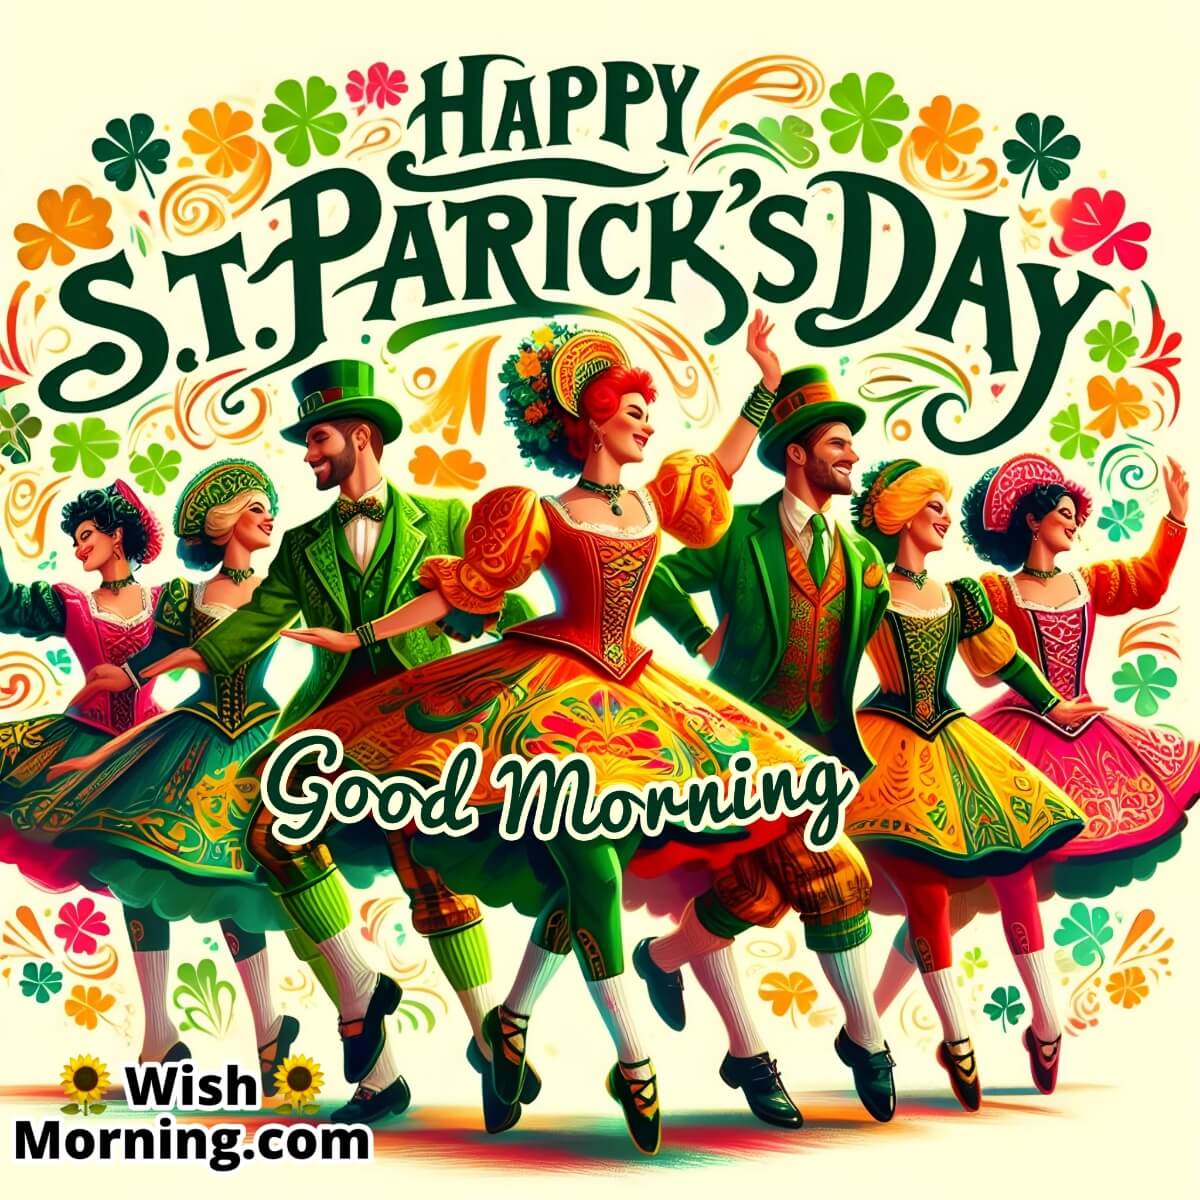 Good Morning St. Patrick's Day Irish Dancers